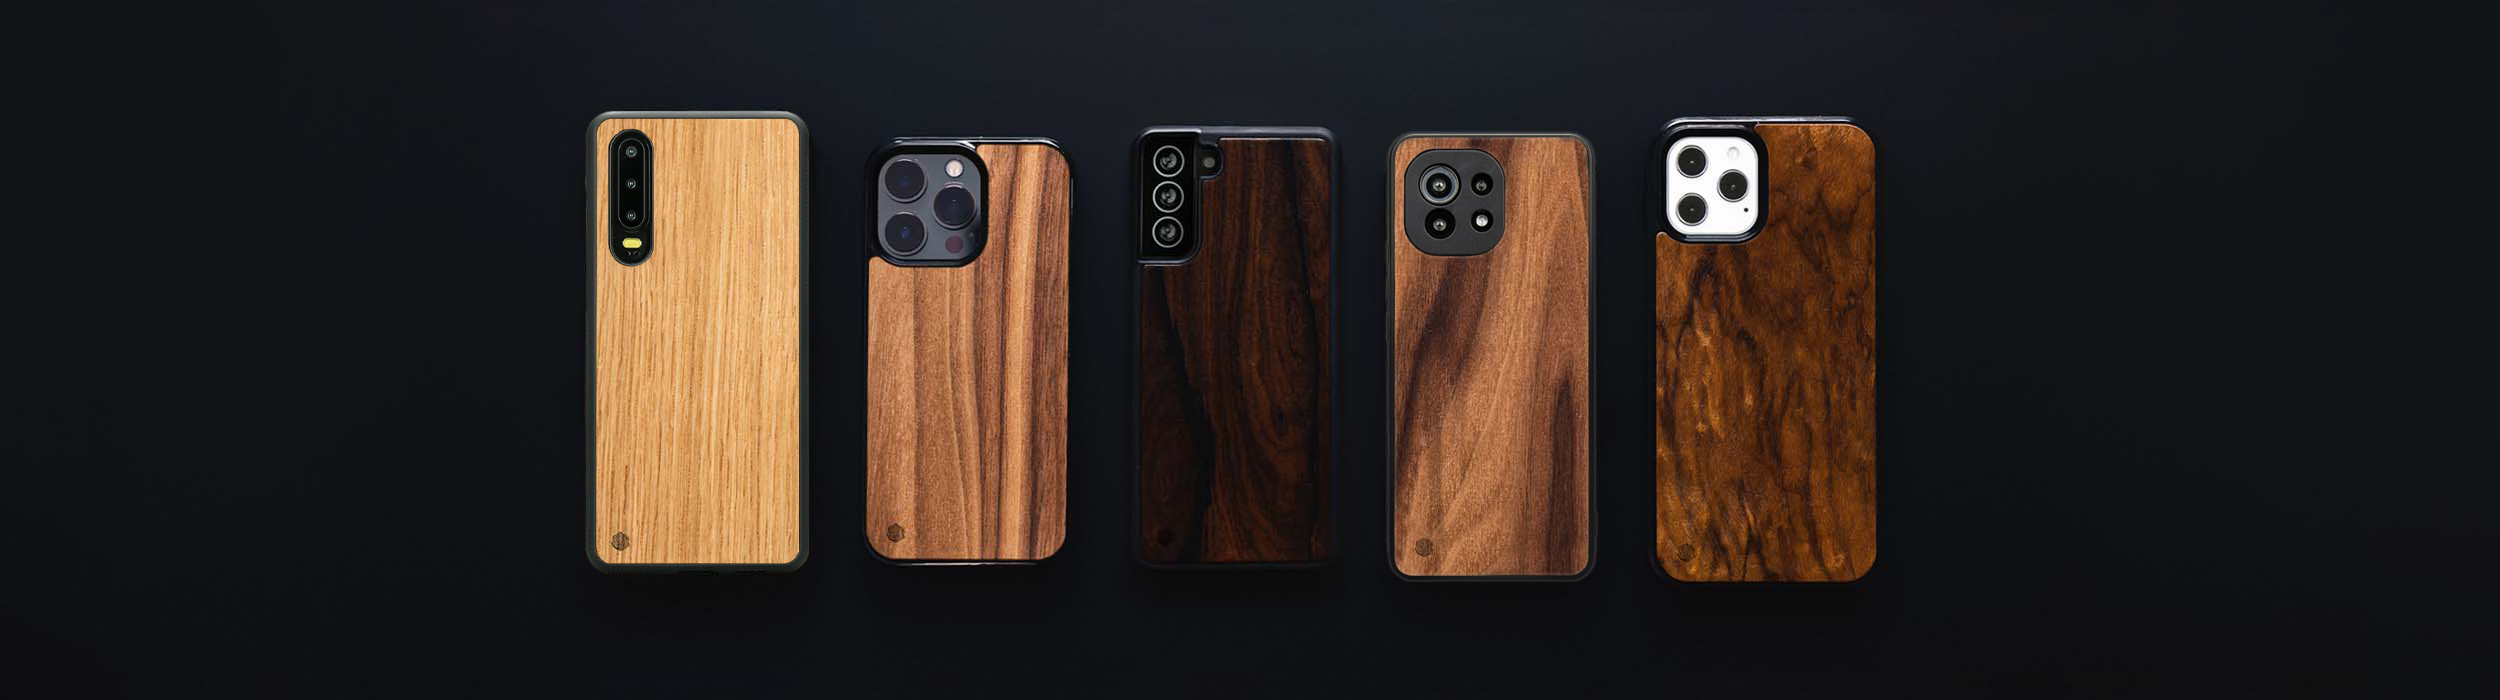 Xiaomi Mi 10 Handyhüllen aus Holz